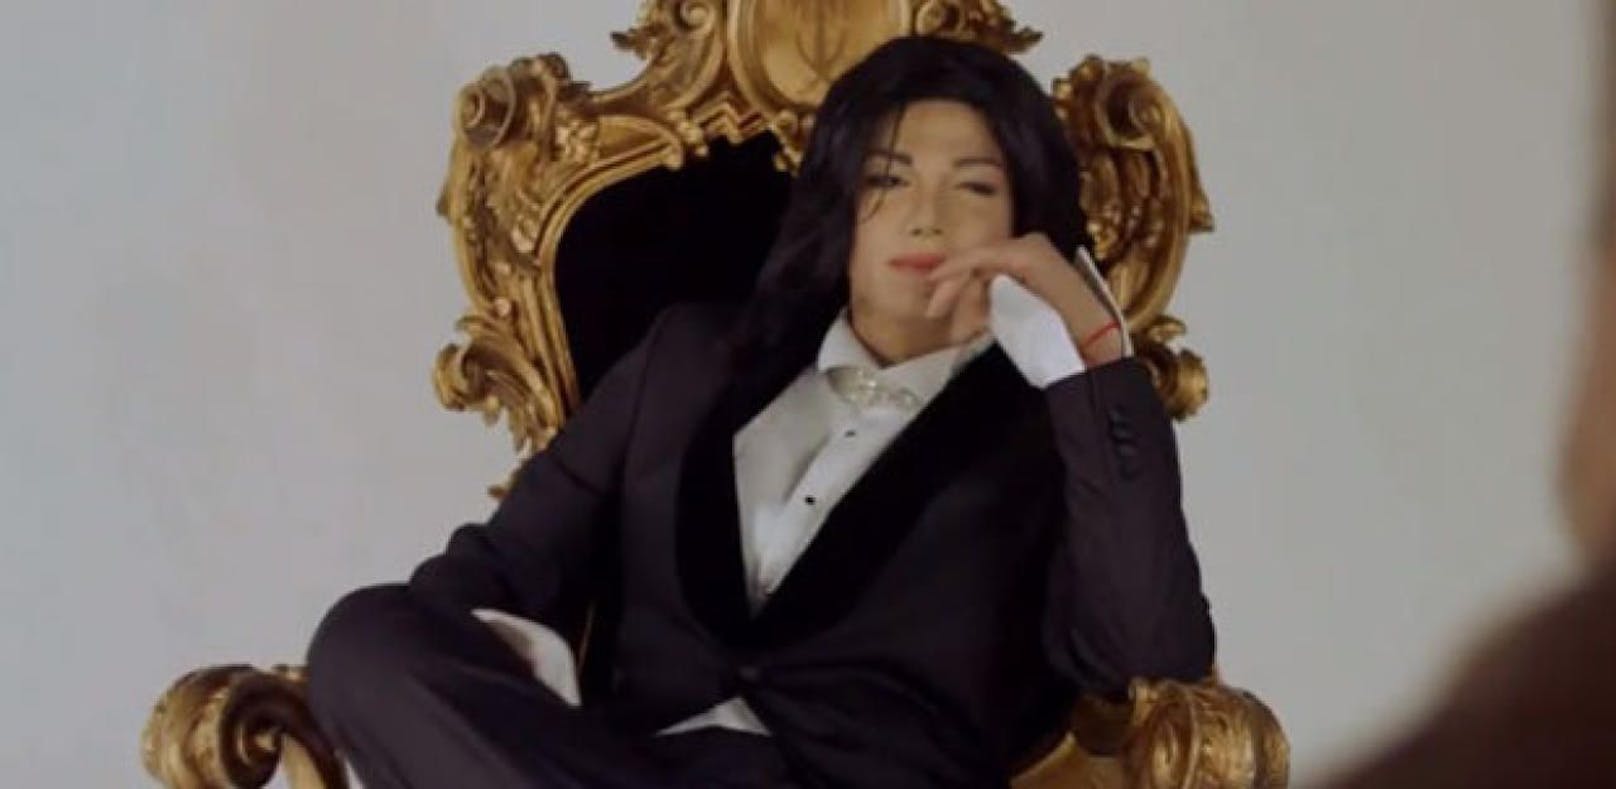 Michael Jackson-Double als "King of Pop" in Biopic